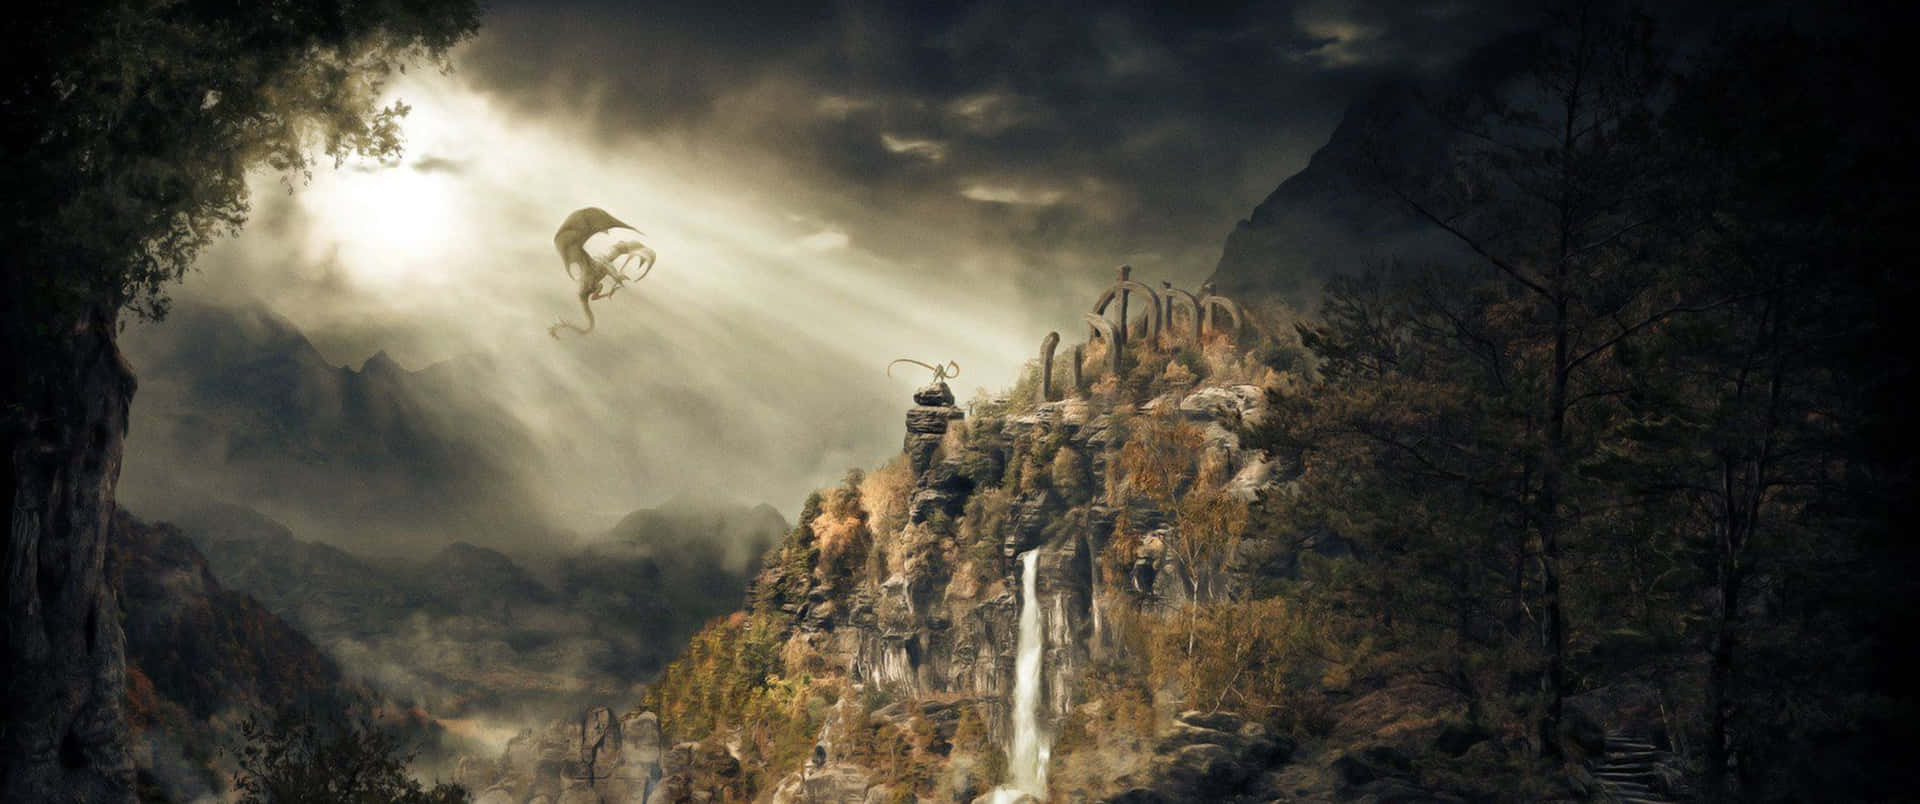 Travel Through Skyrim with The Elder Scrolls V